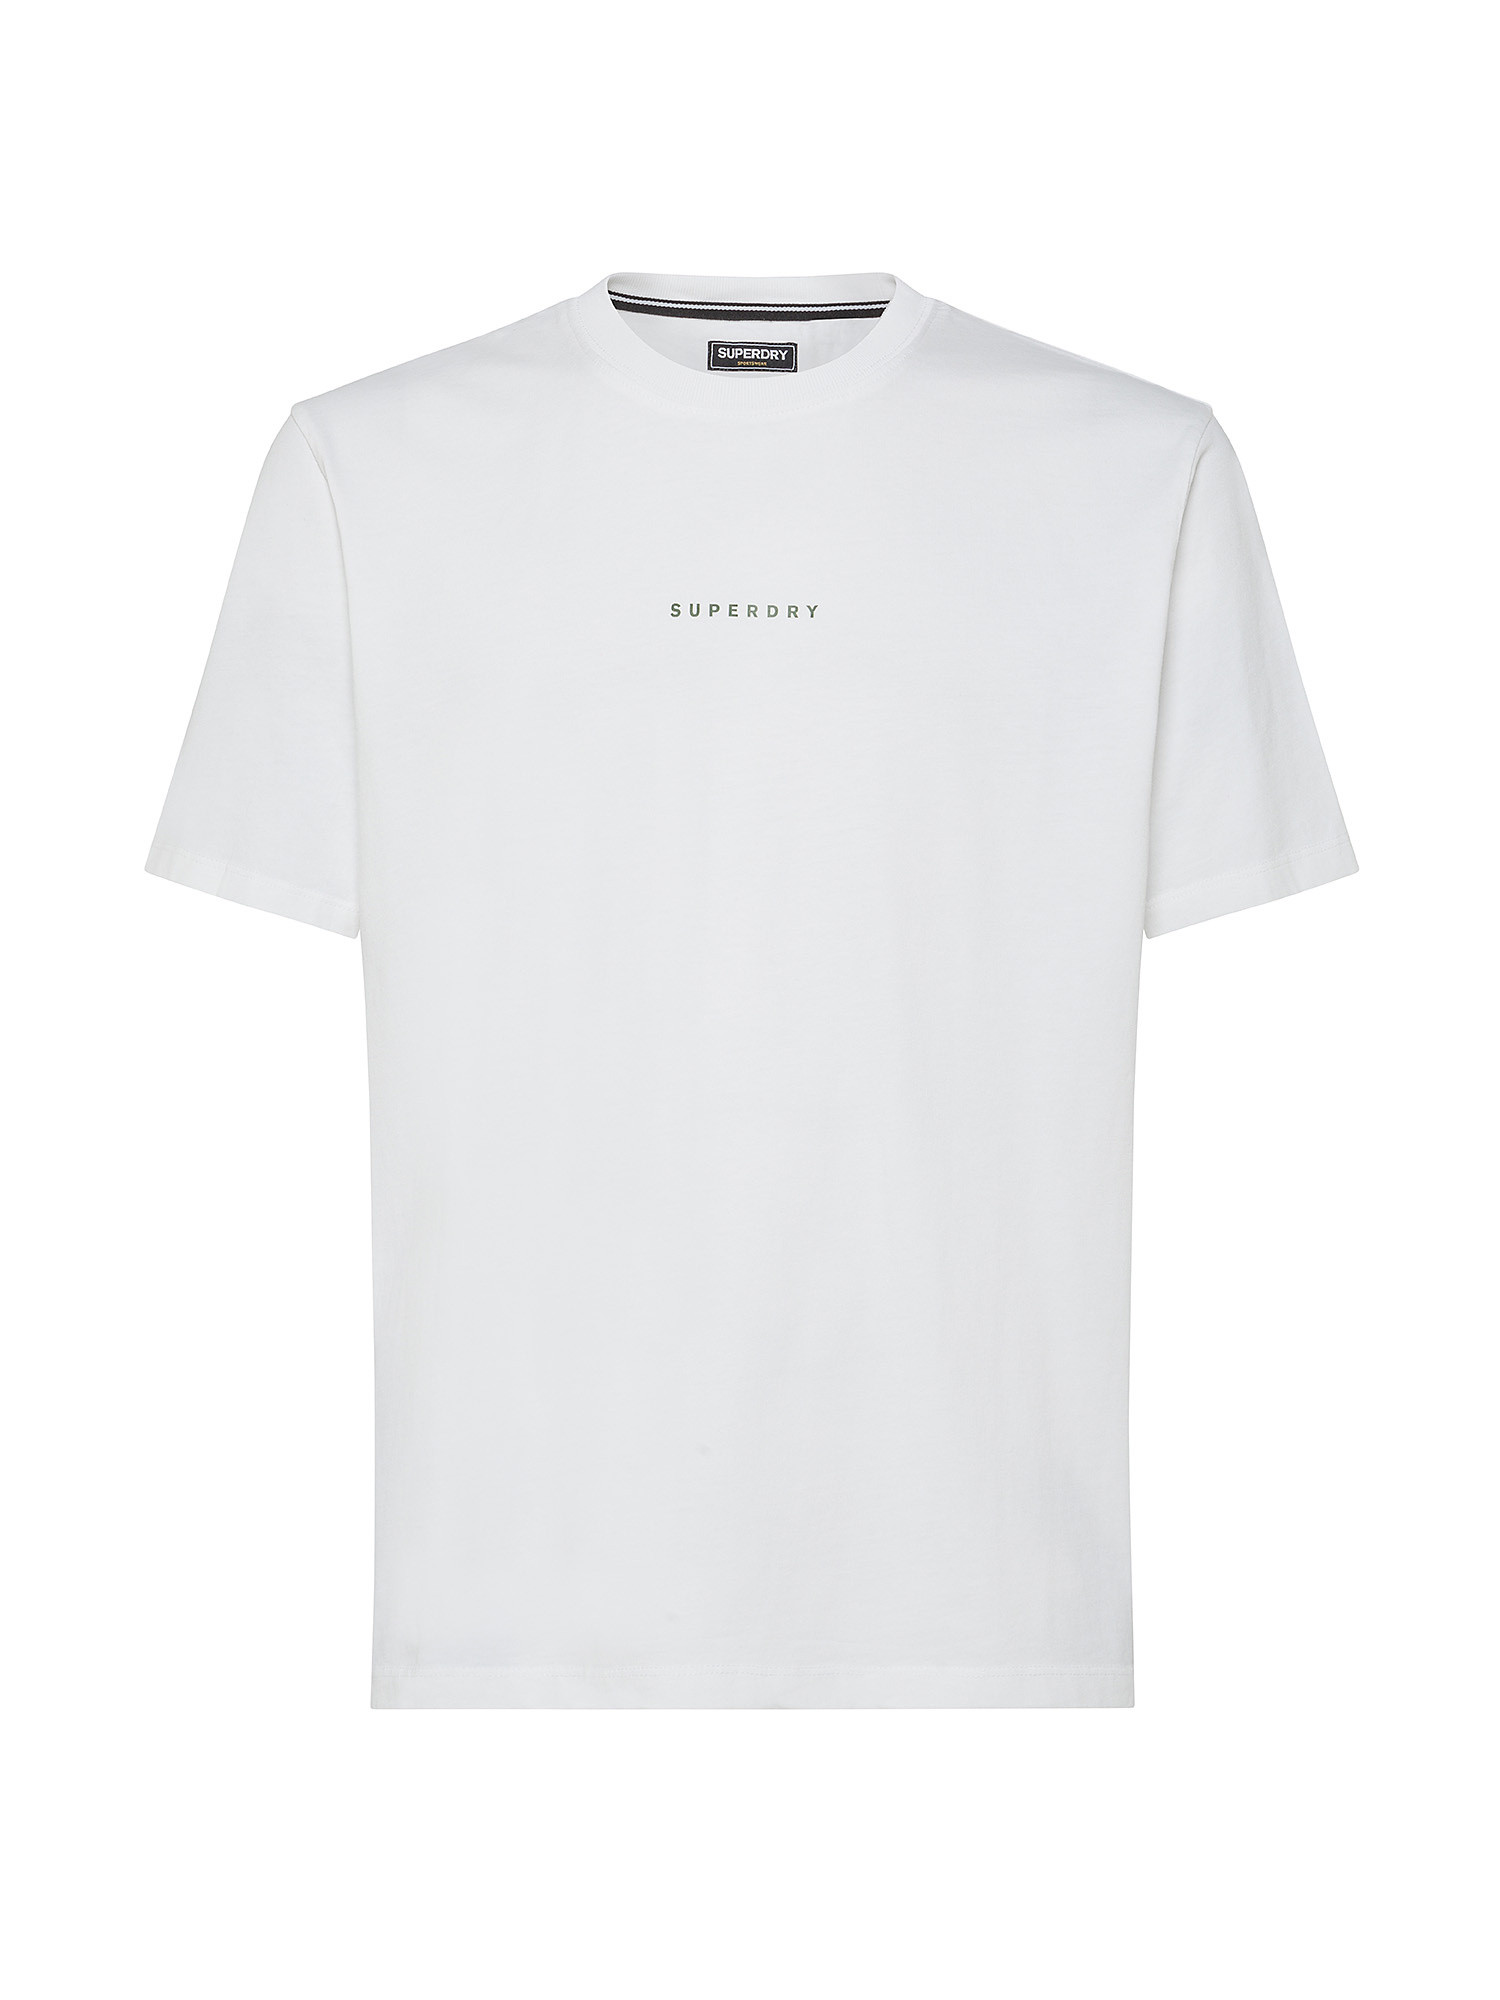 Superdry basic micro logo cotton t-shirt, White, large image number 0